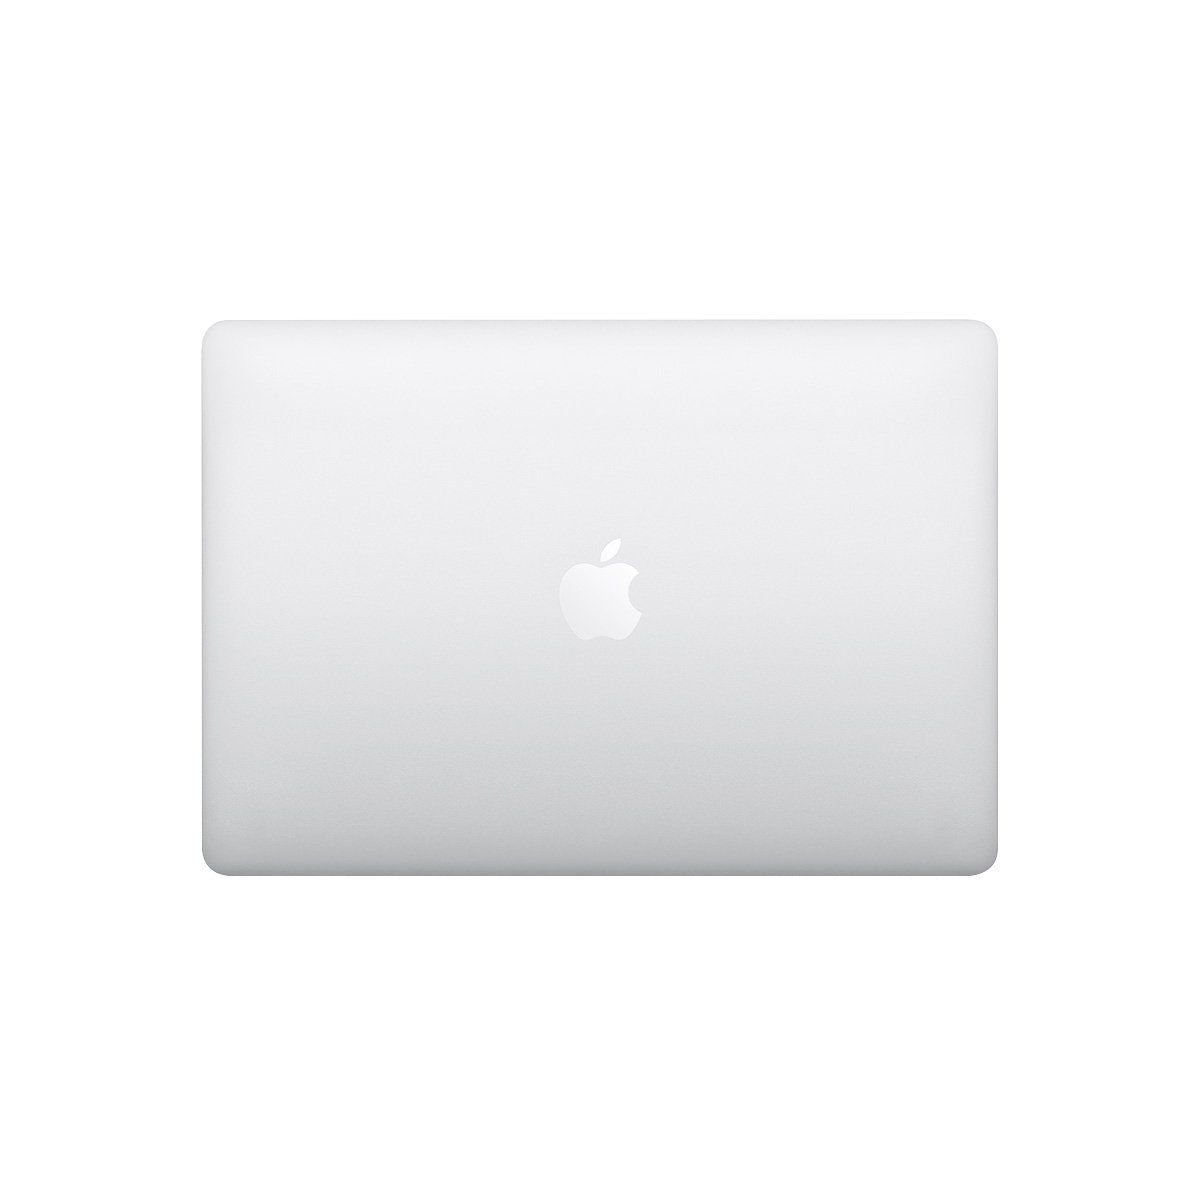 Macbook Pro 13-inch (Touchbar | four thunderbolt 3 ports) - 2018 - i5 - Silver